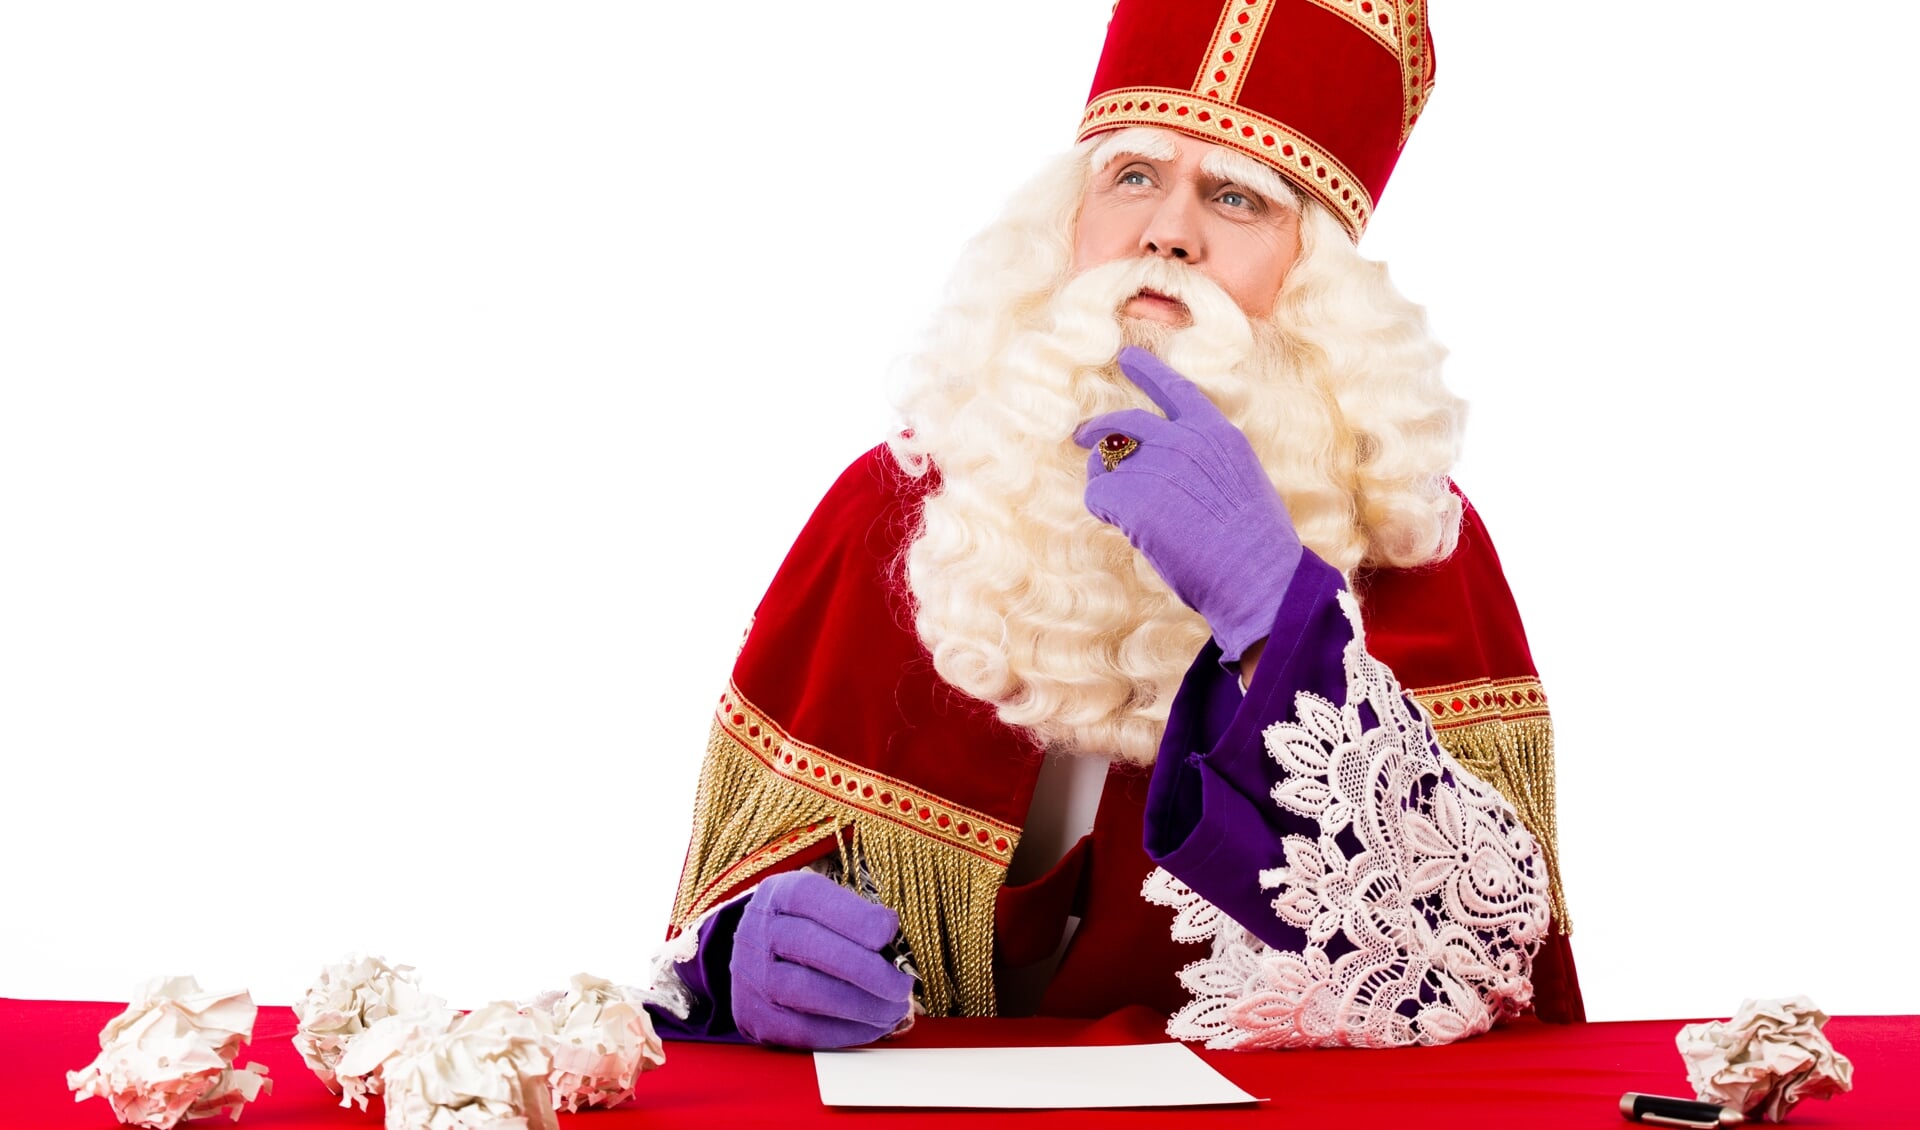 Sinterklaas thinking of what he should write